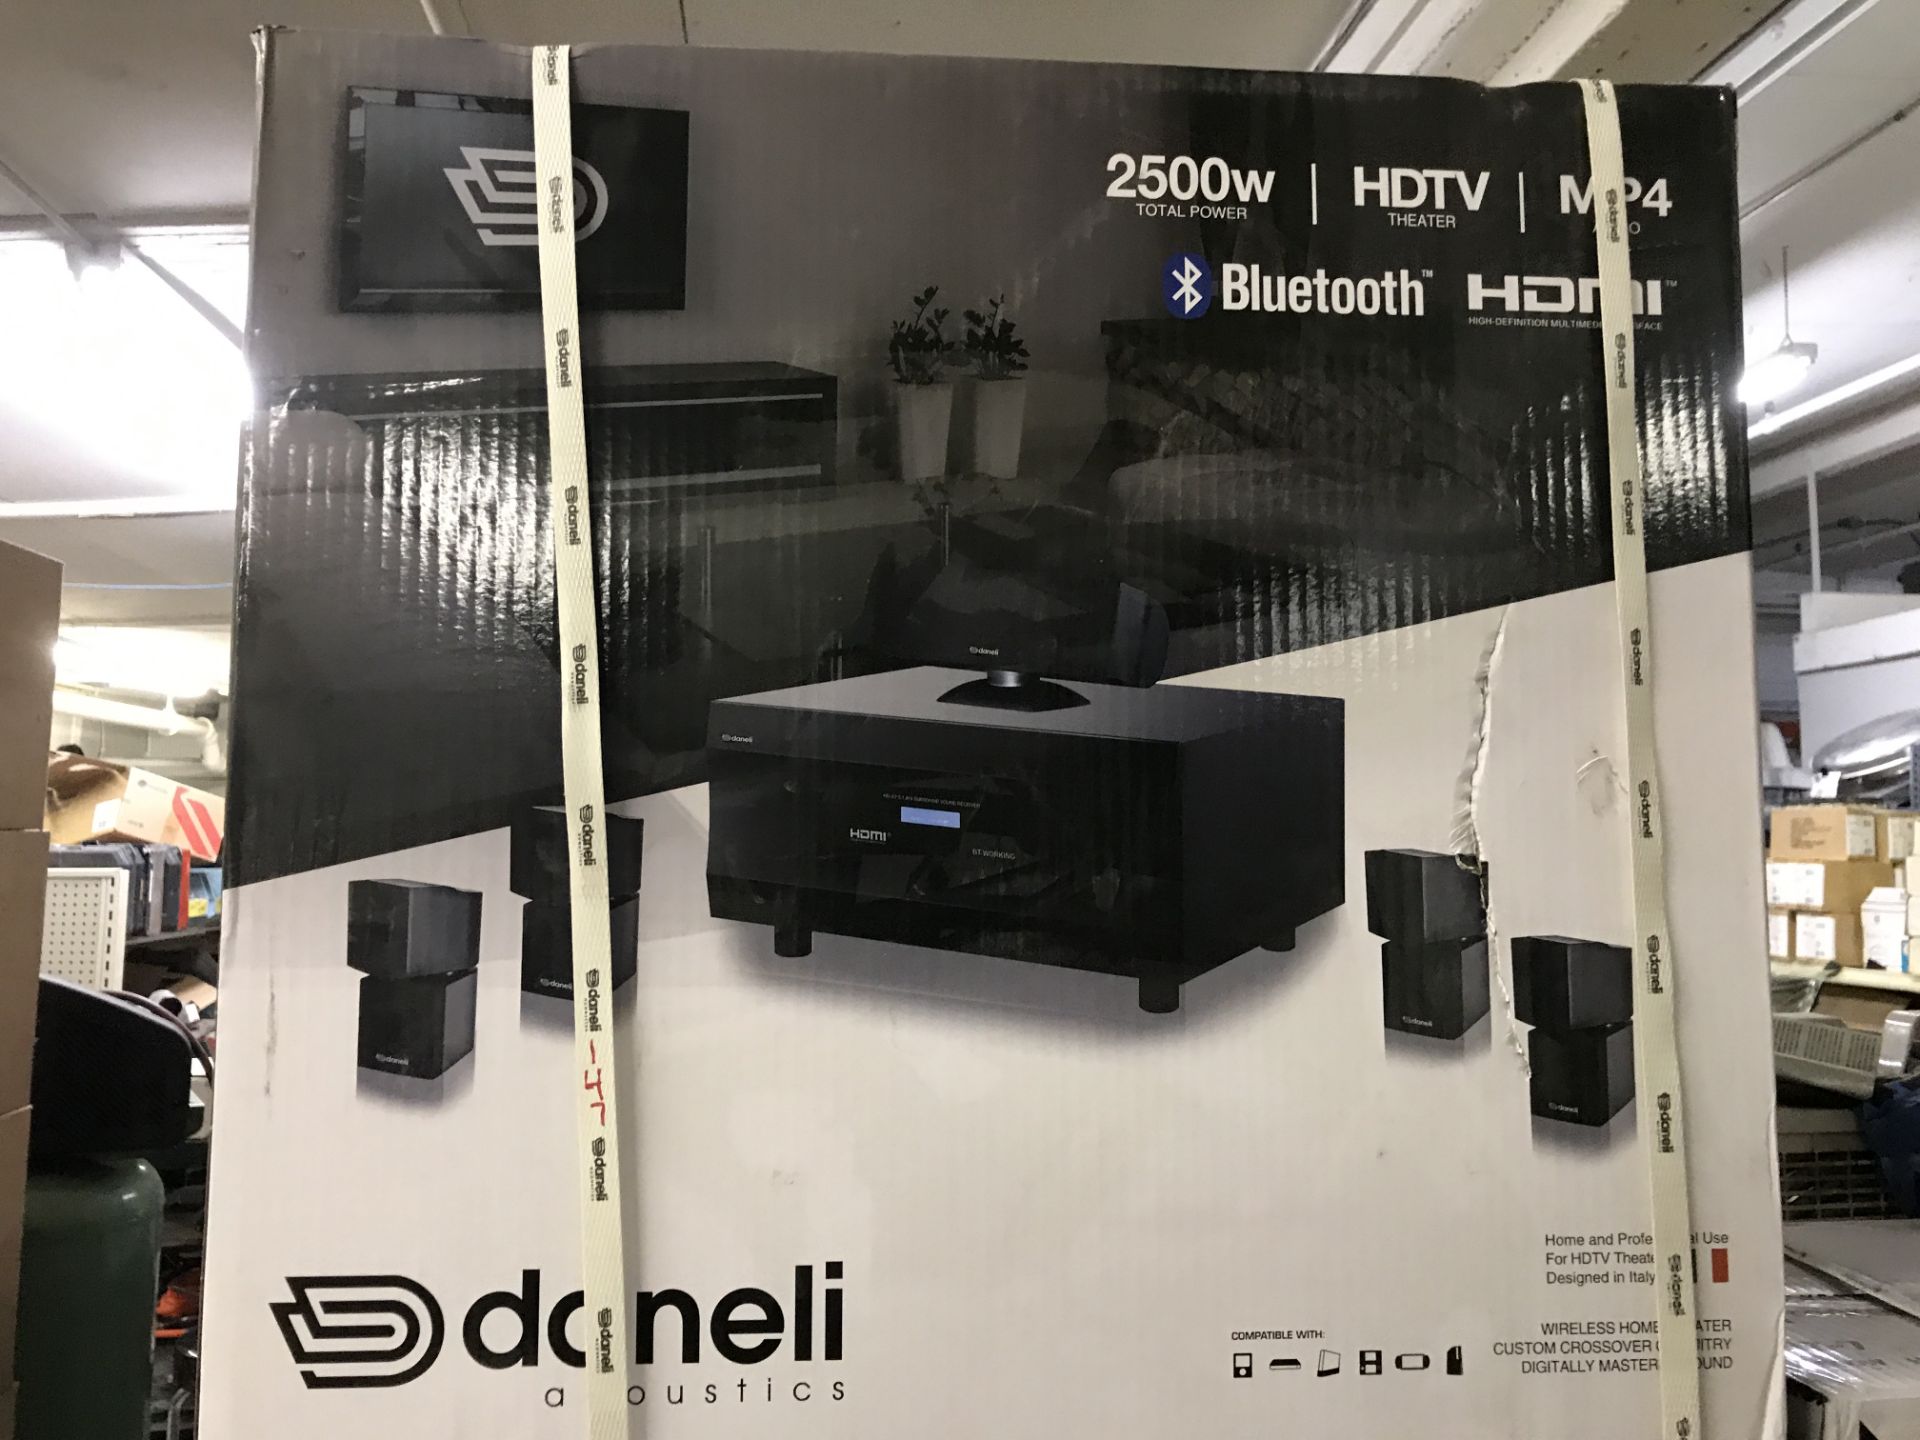 Daneli #HD67 5.1 Home Theater System 2500 Watt Bluetooth